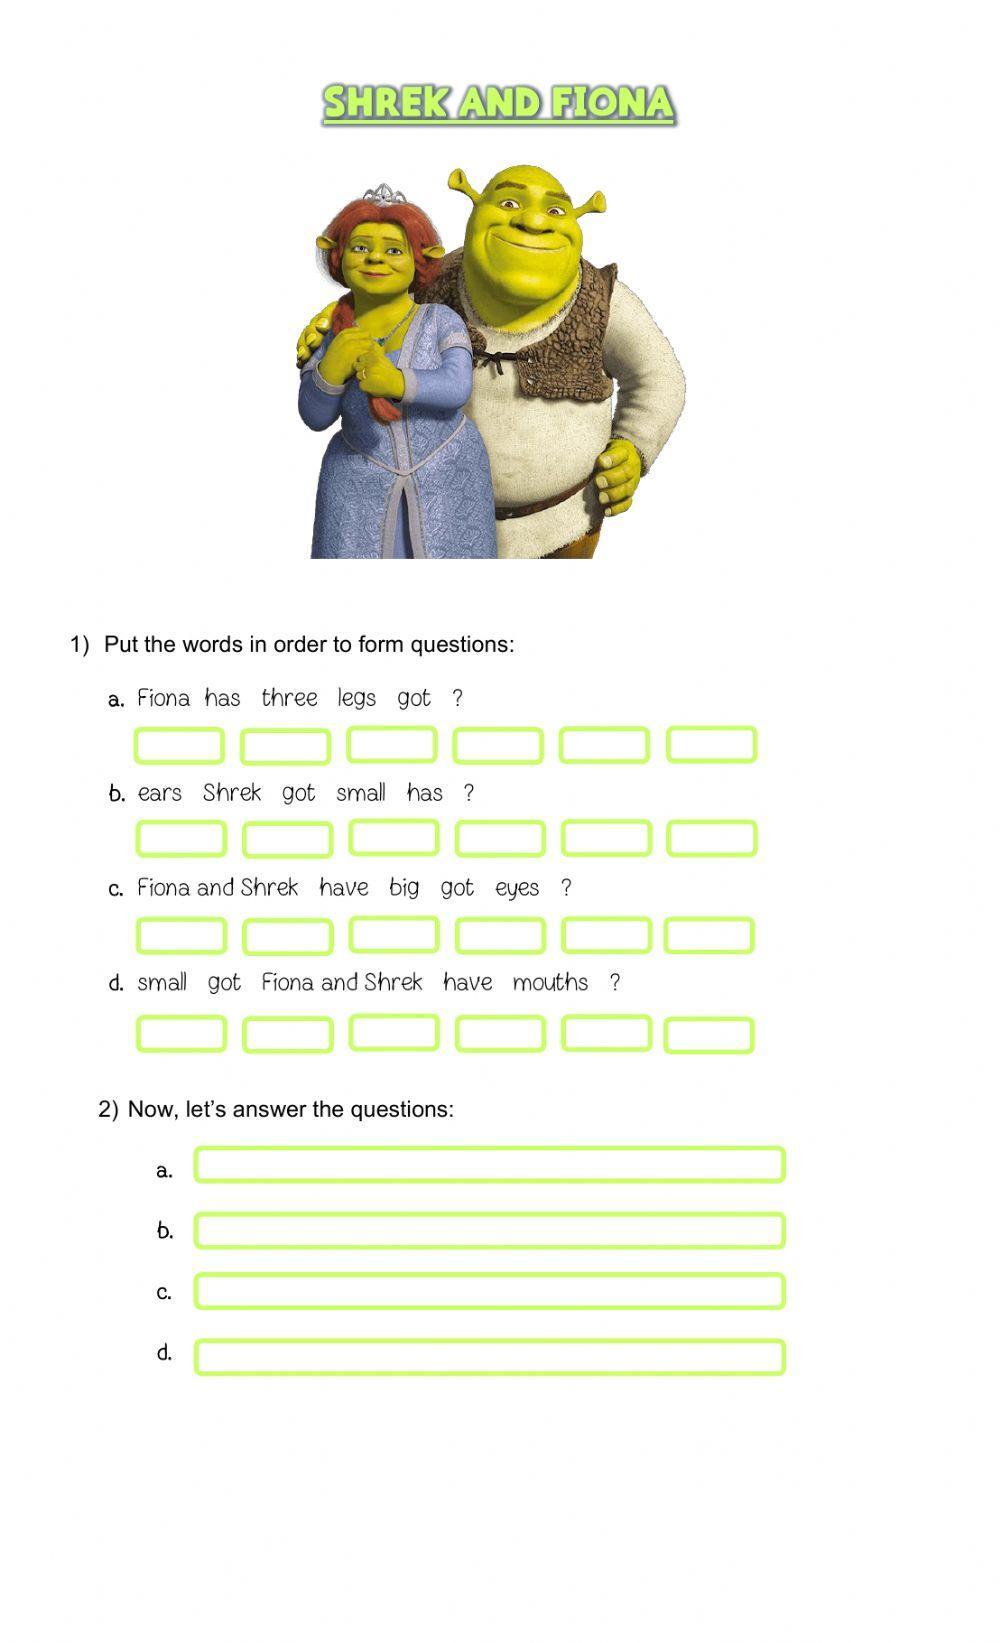 Shrek and Fiona - Have-has got interrogative